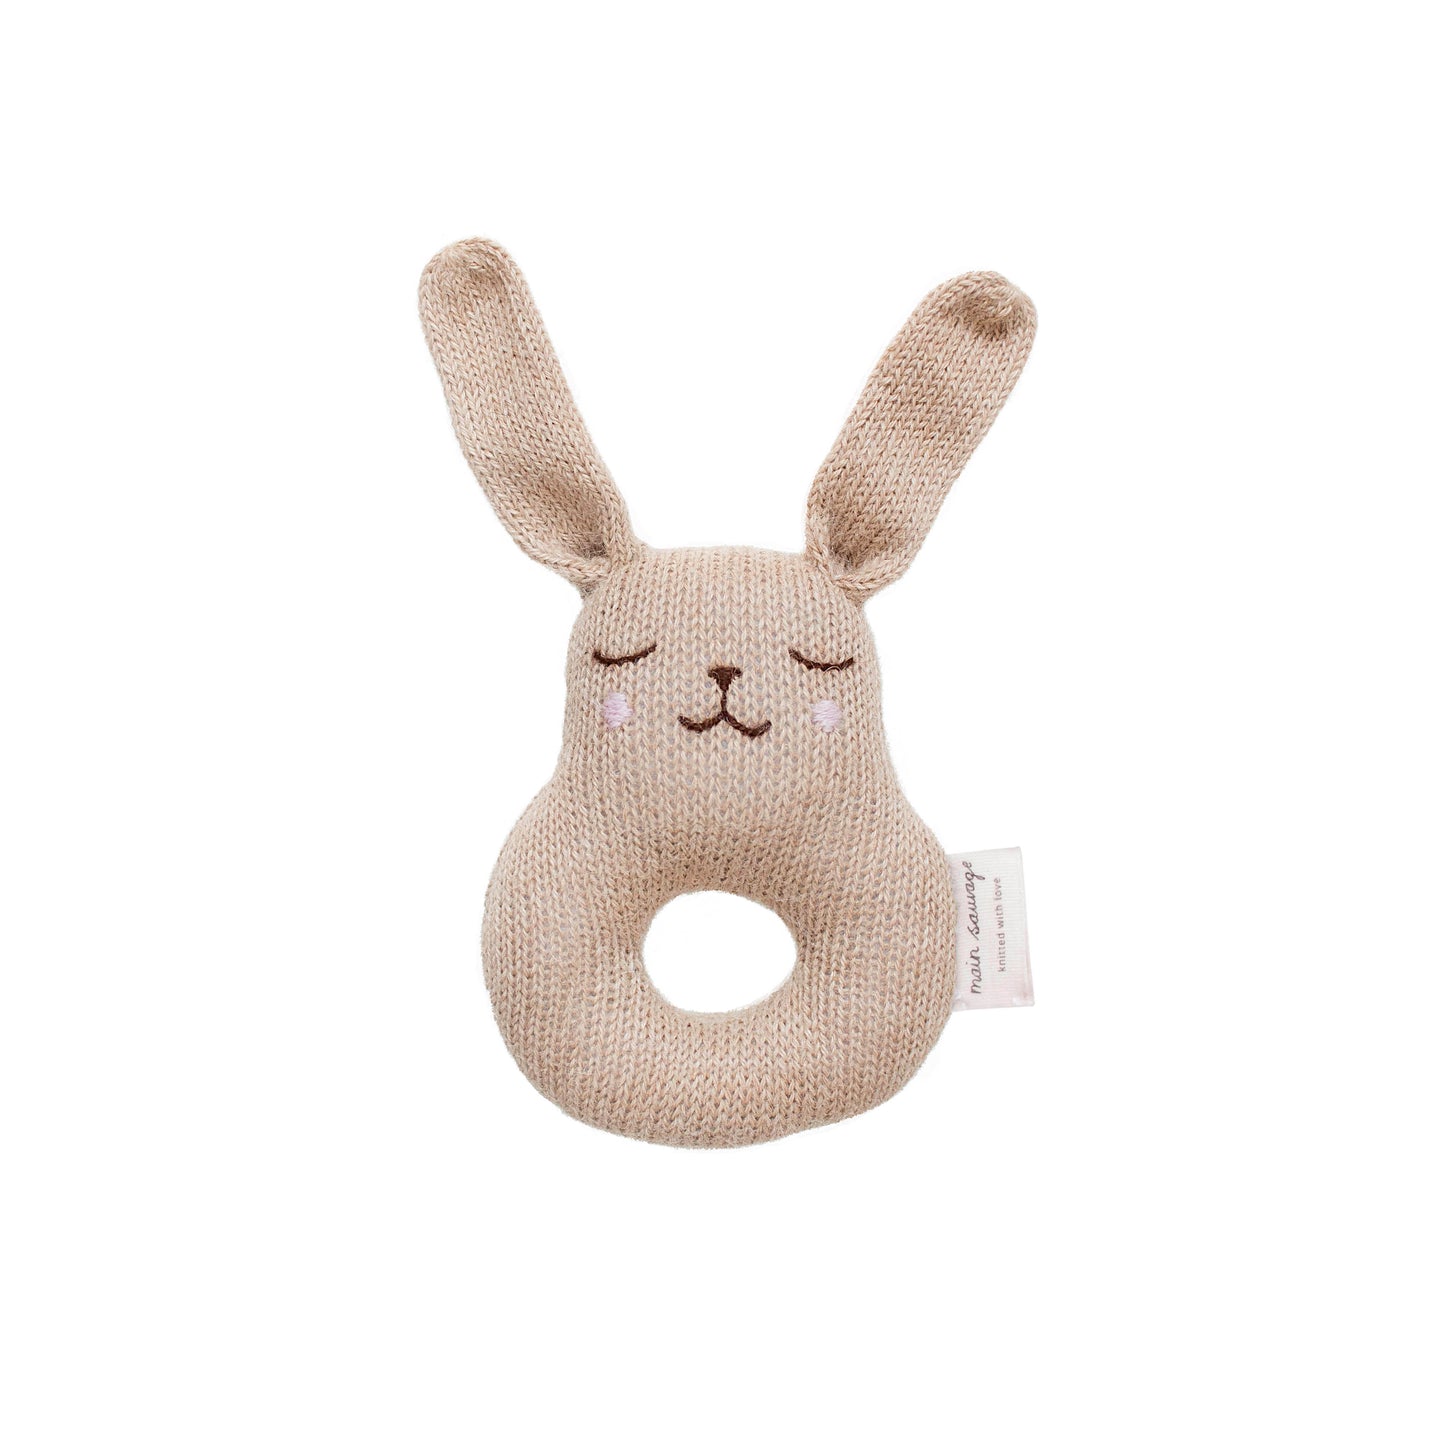 Alpaca wool handknitted Bunny baby rattle - Sand